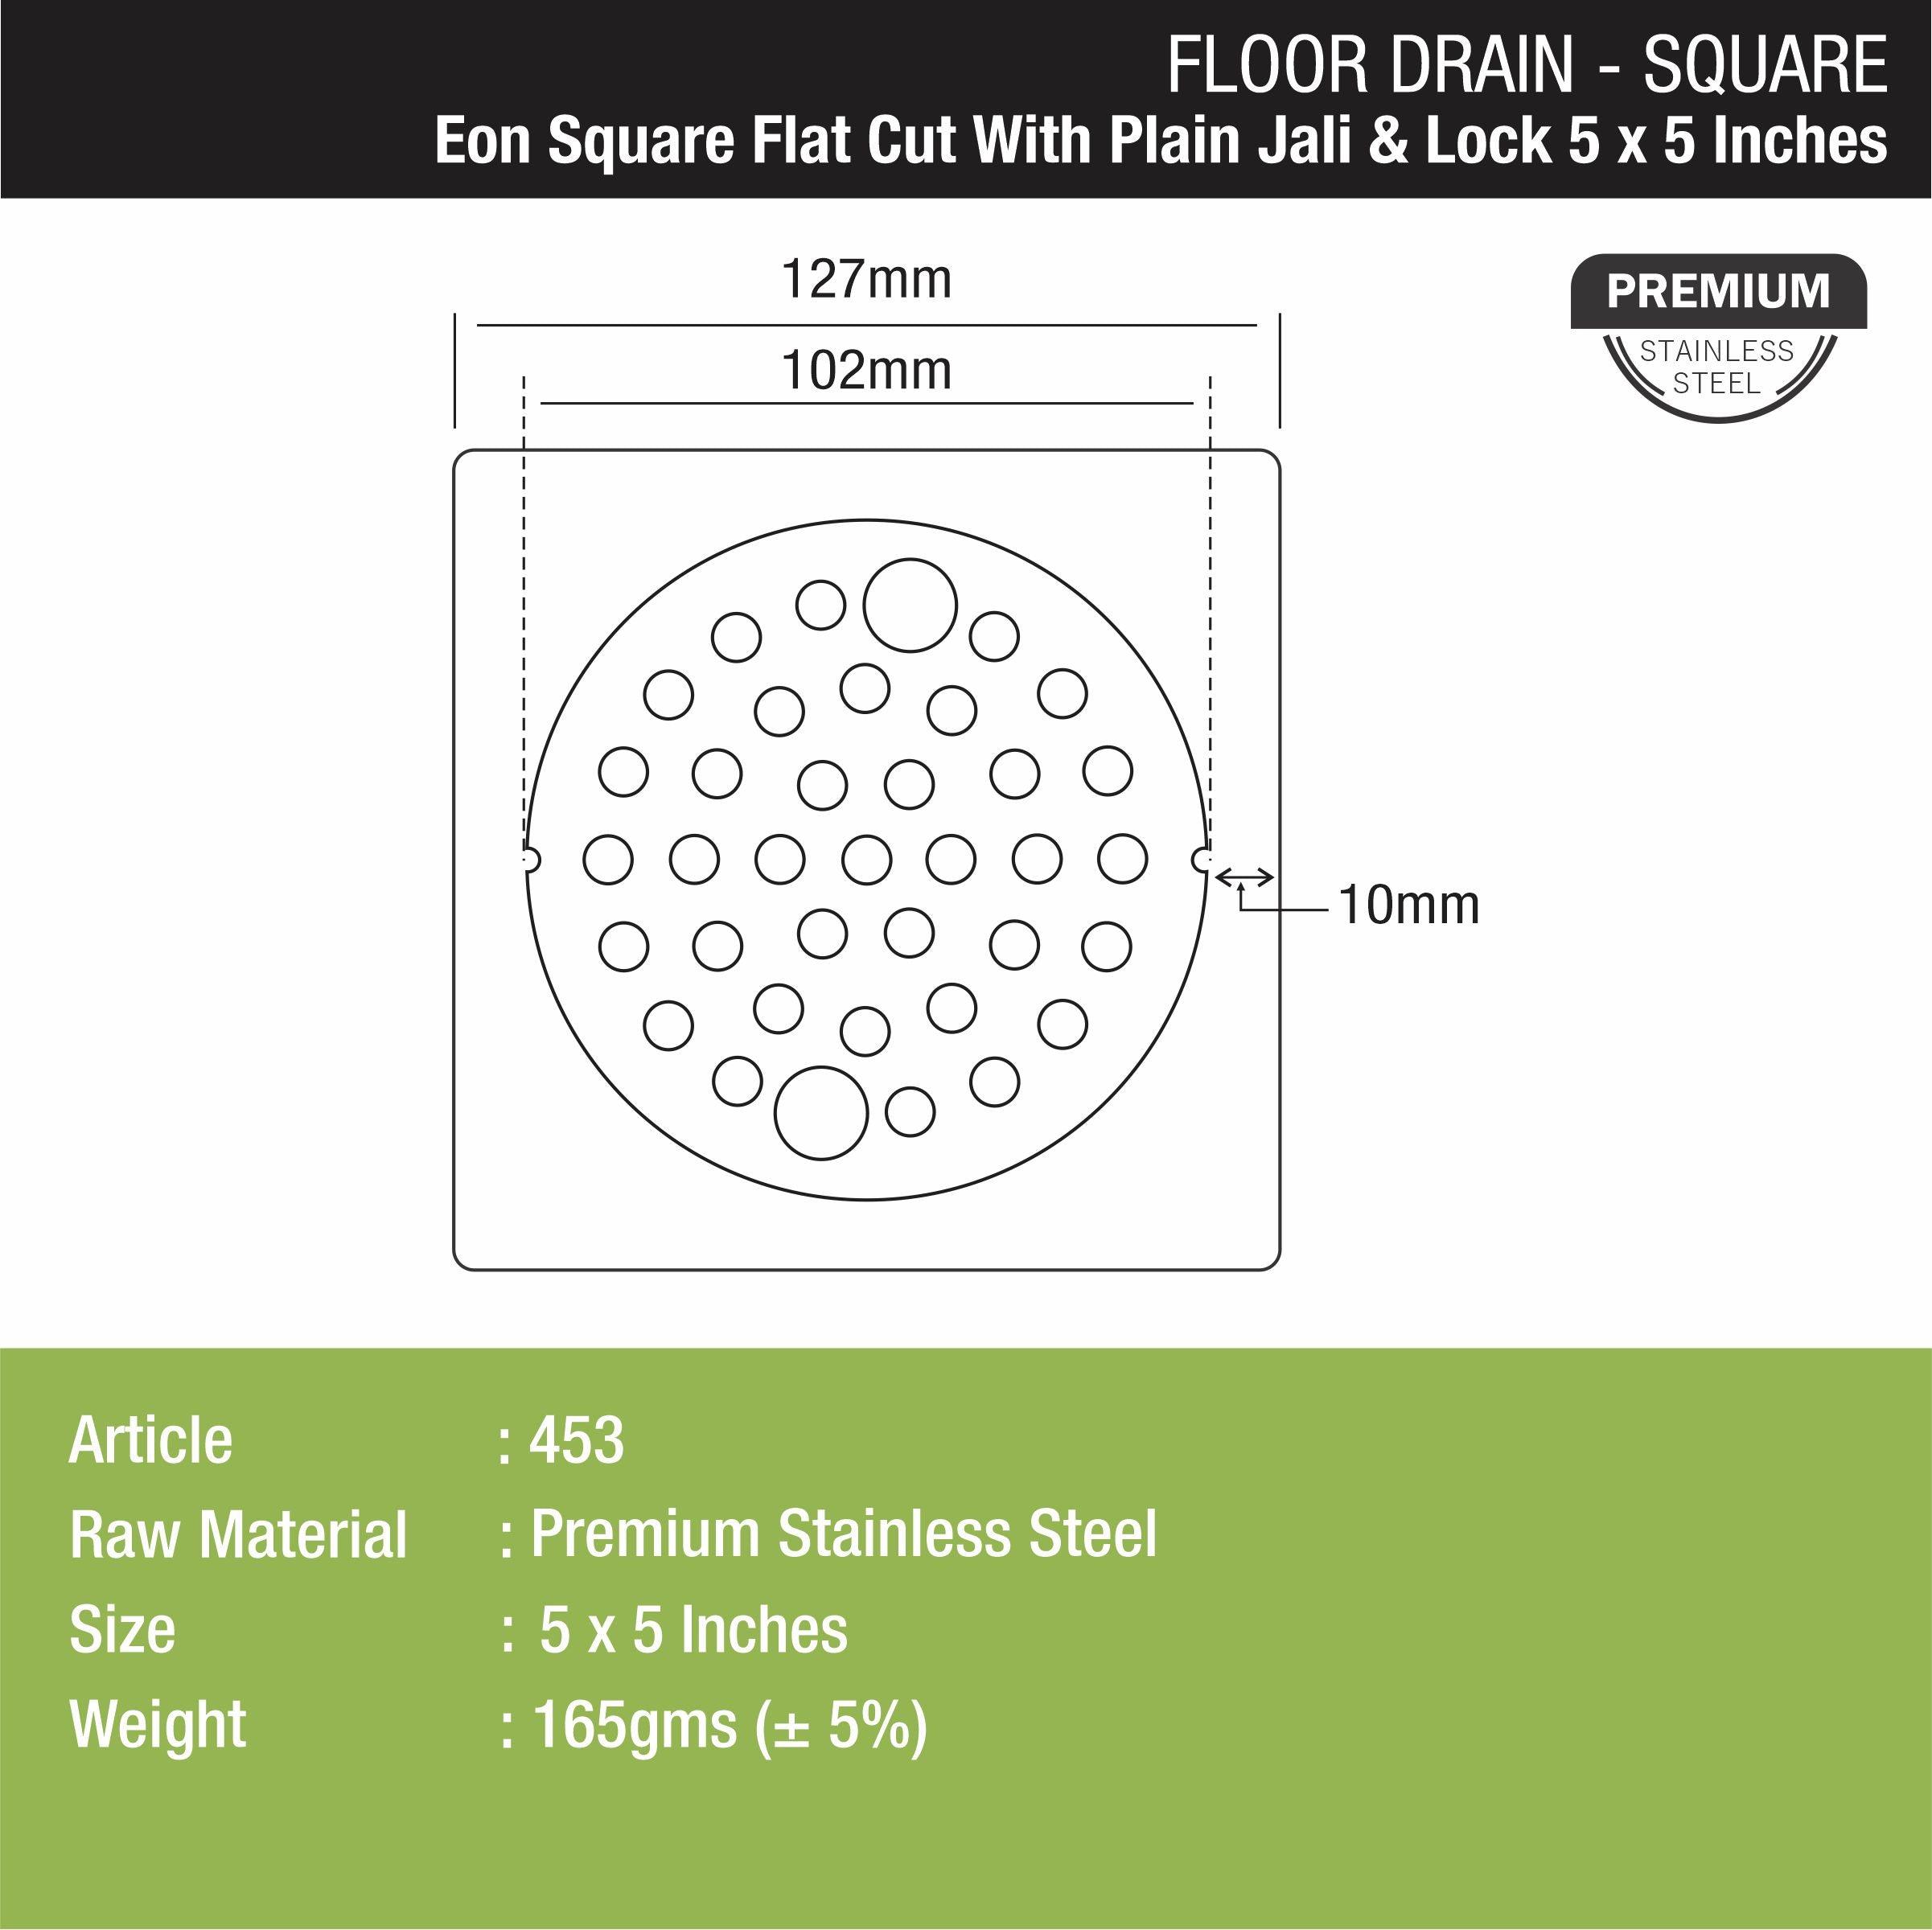 Eon Square Flat Cut Floor Drain with Plain Jali and Lock (5 x 5 Inches) - LIPKA - Lipka Home